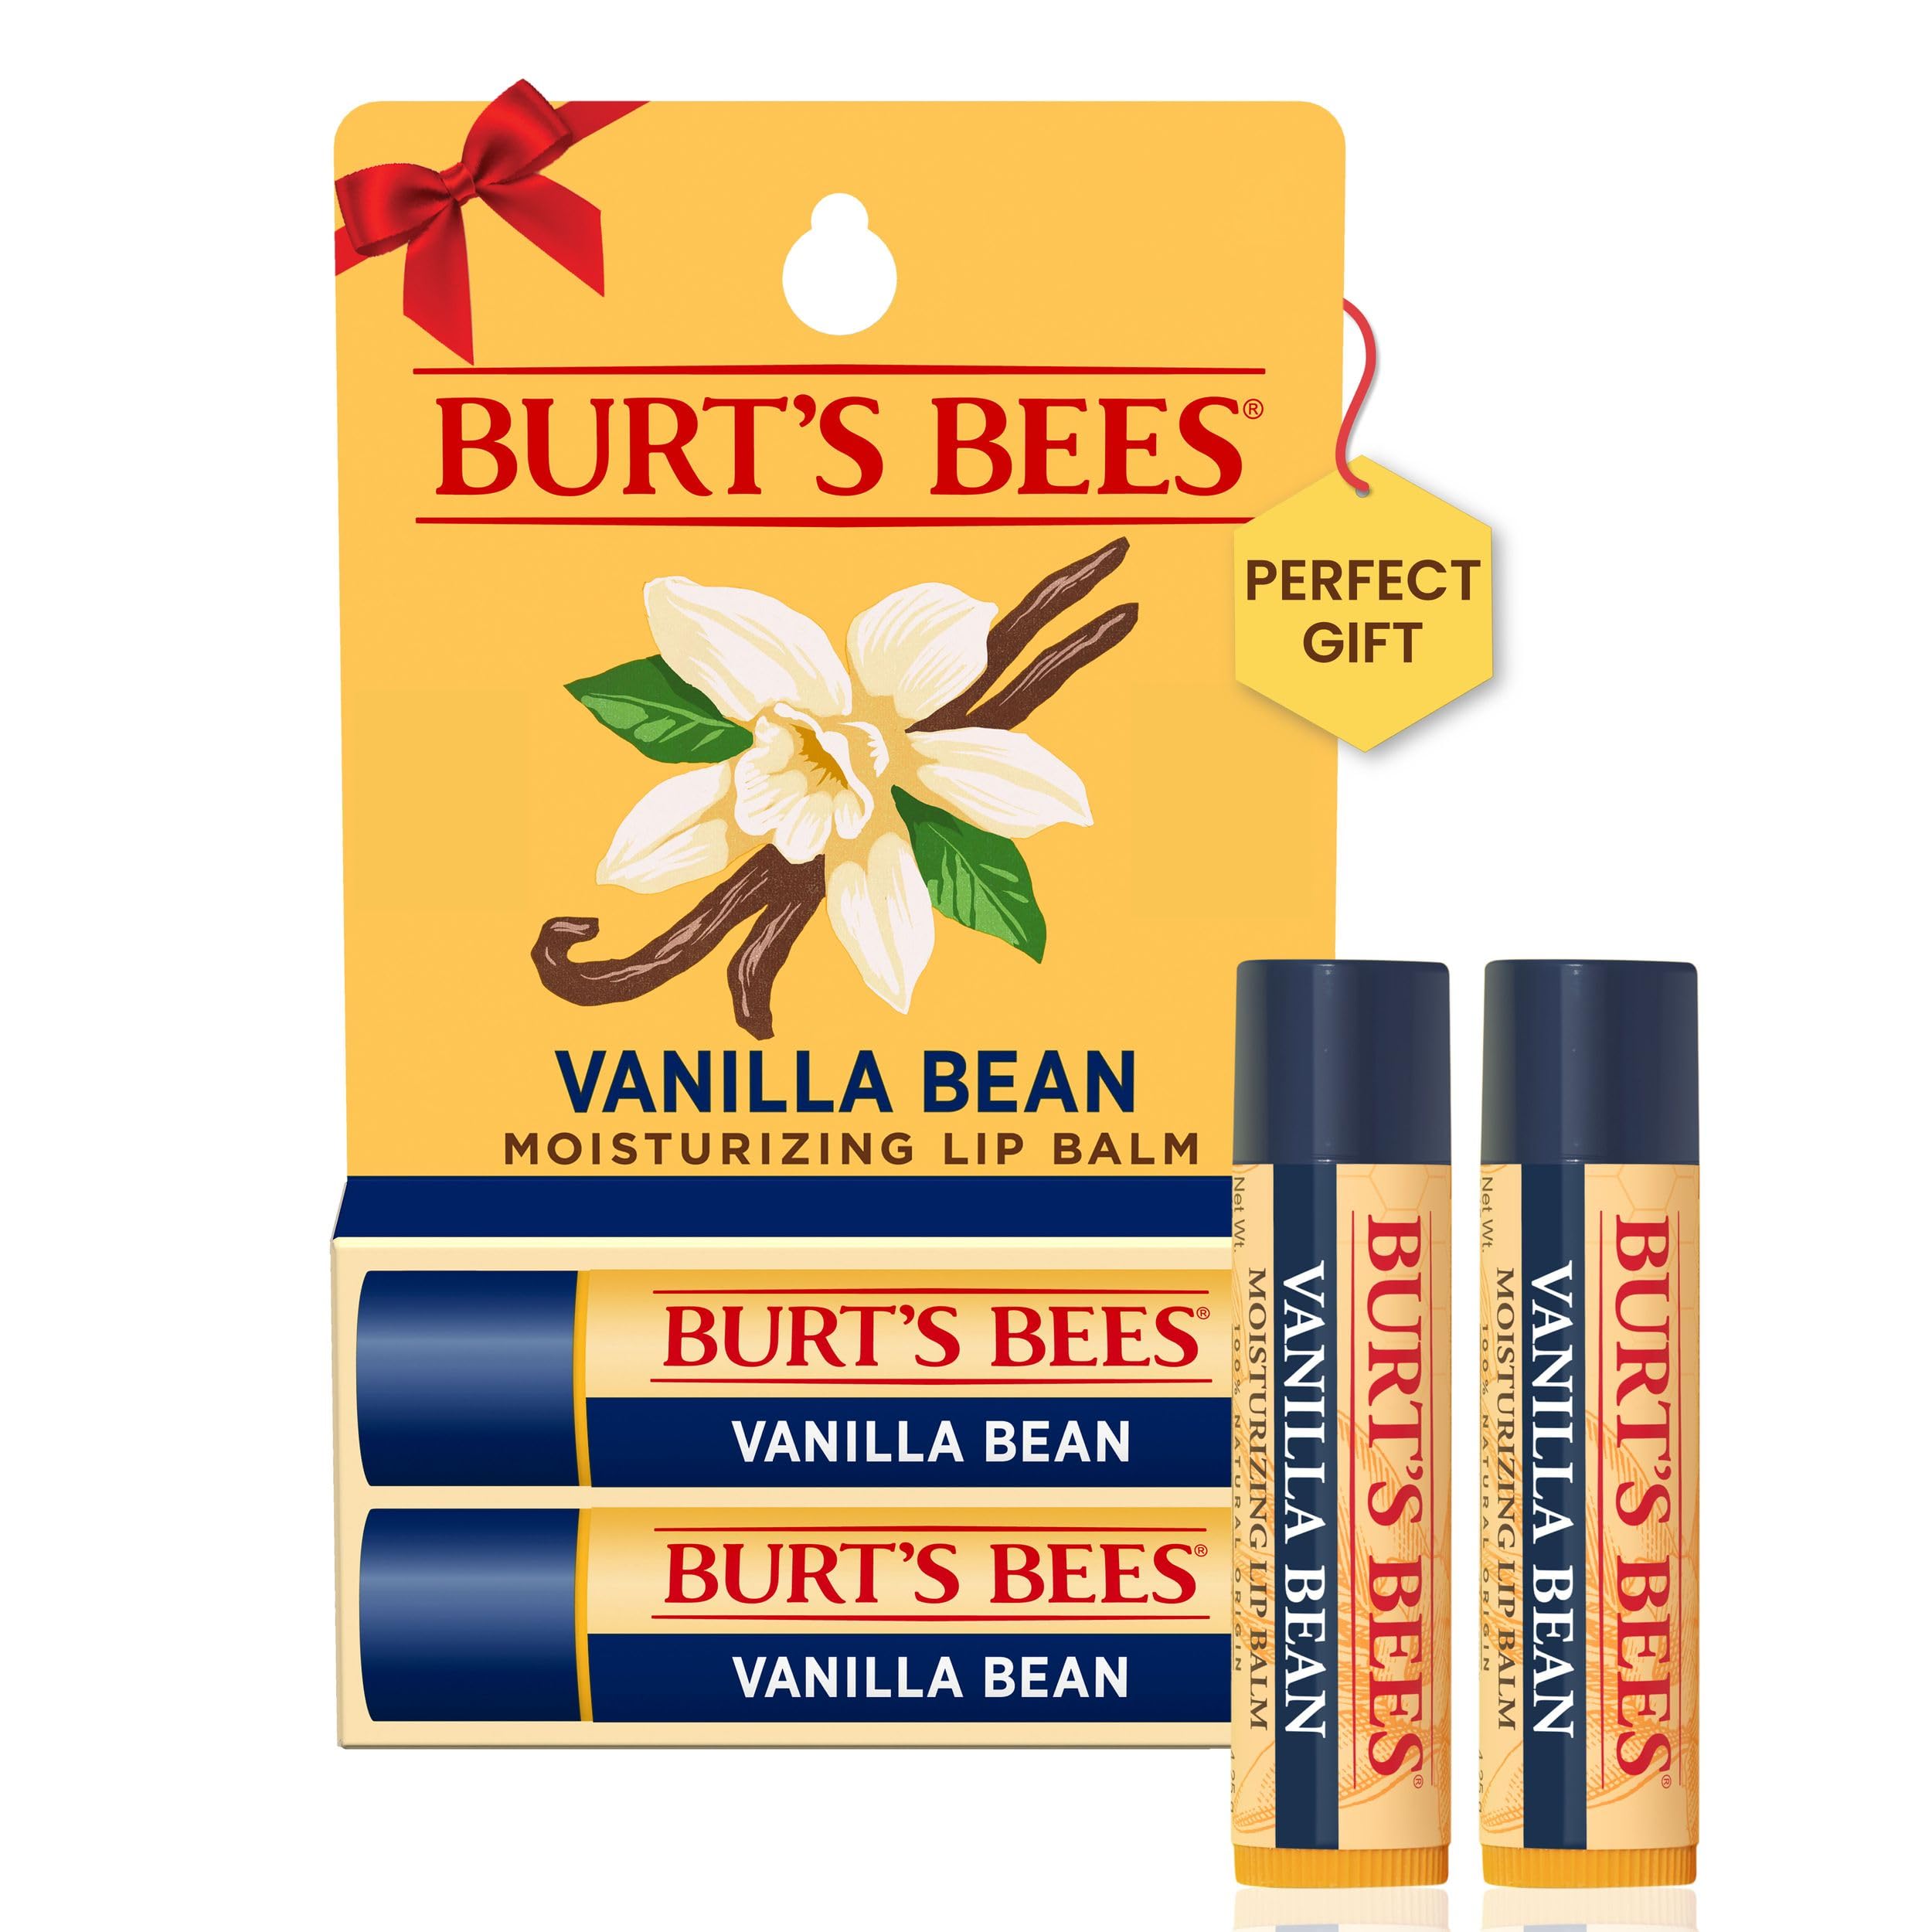 Burt's Bees Lip Balm Stocking Stuffers, Moisturizing Lip Care Christmas Gifts, Vanilla Bean, 100% Natural (2-Pack)